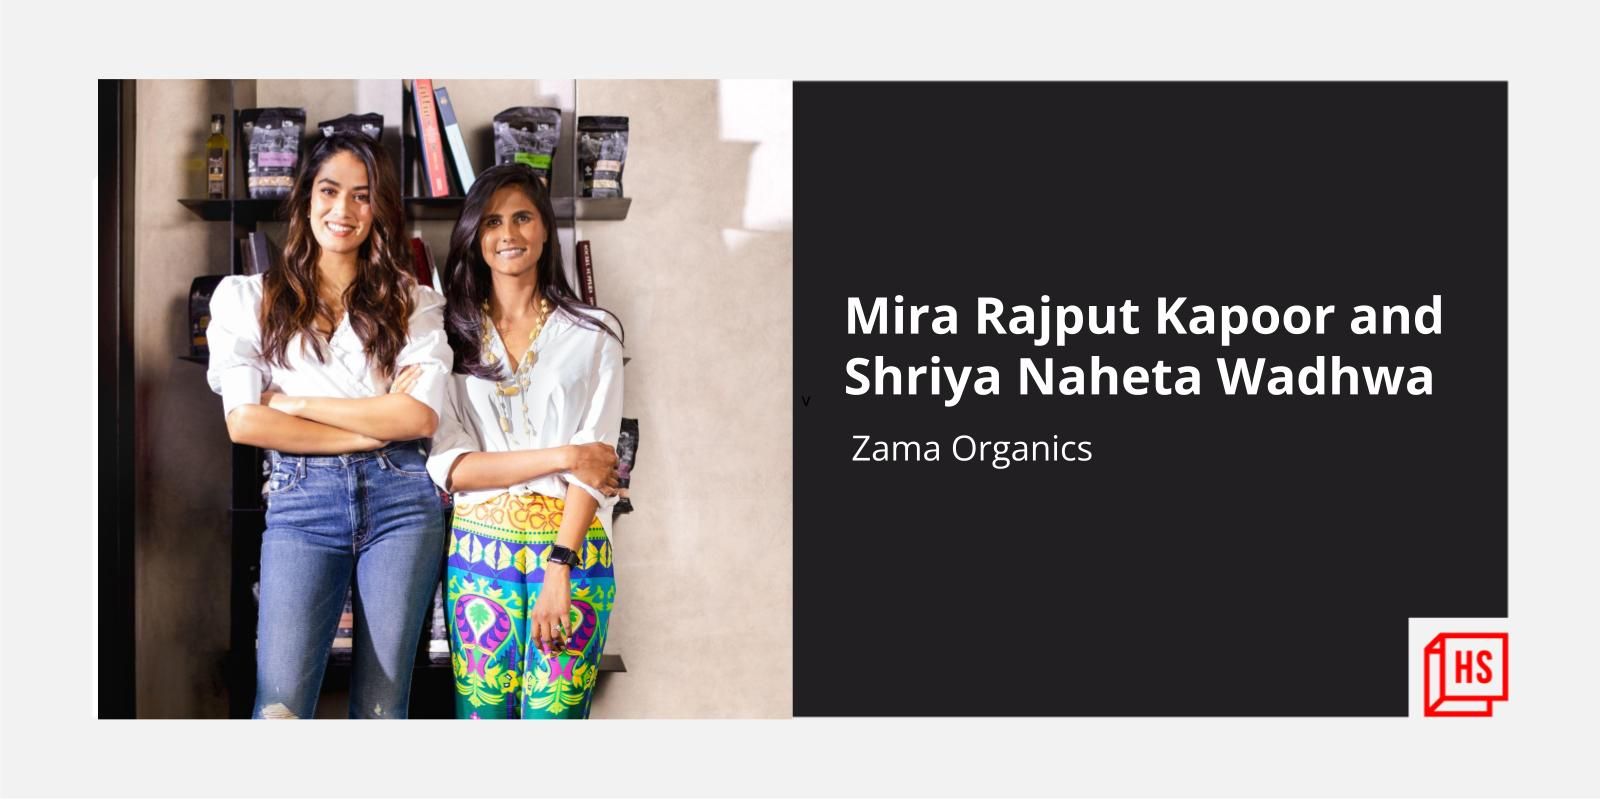 [Funding alert] Mira Kapoor backs Zama Organics as an investor